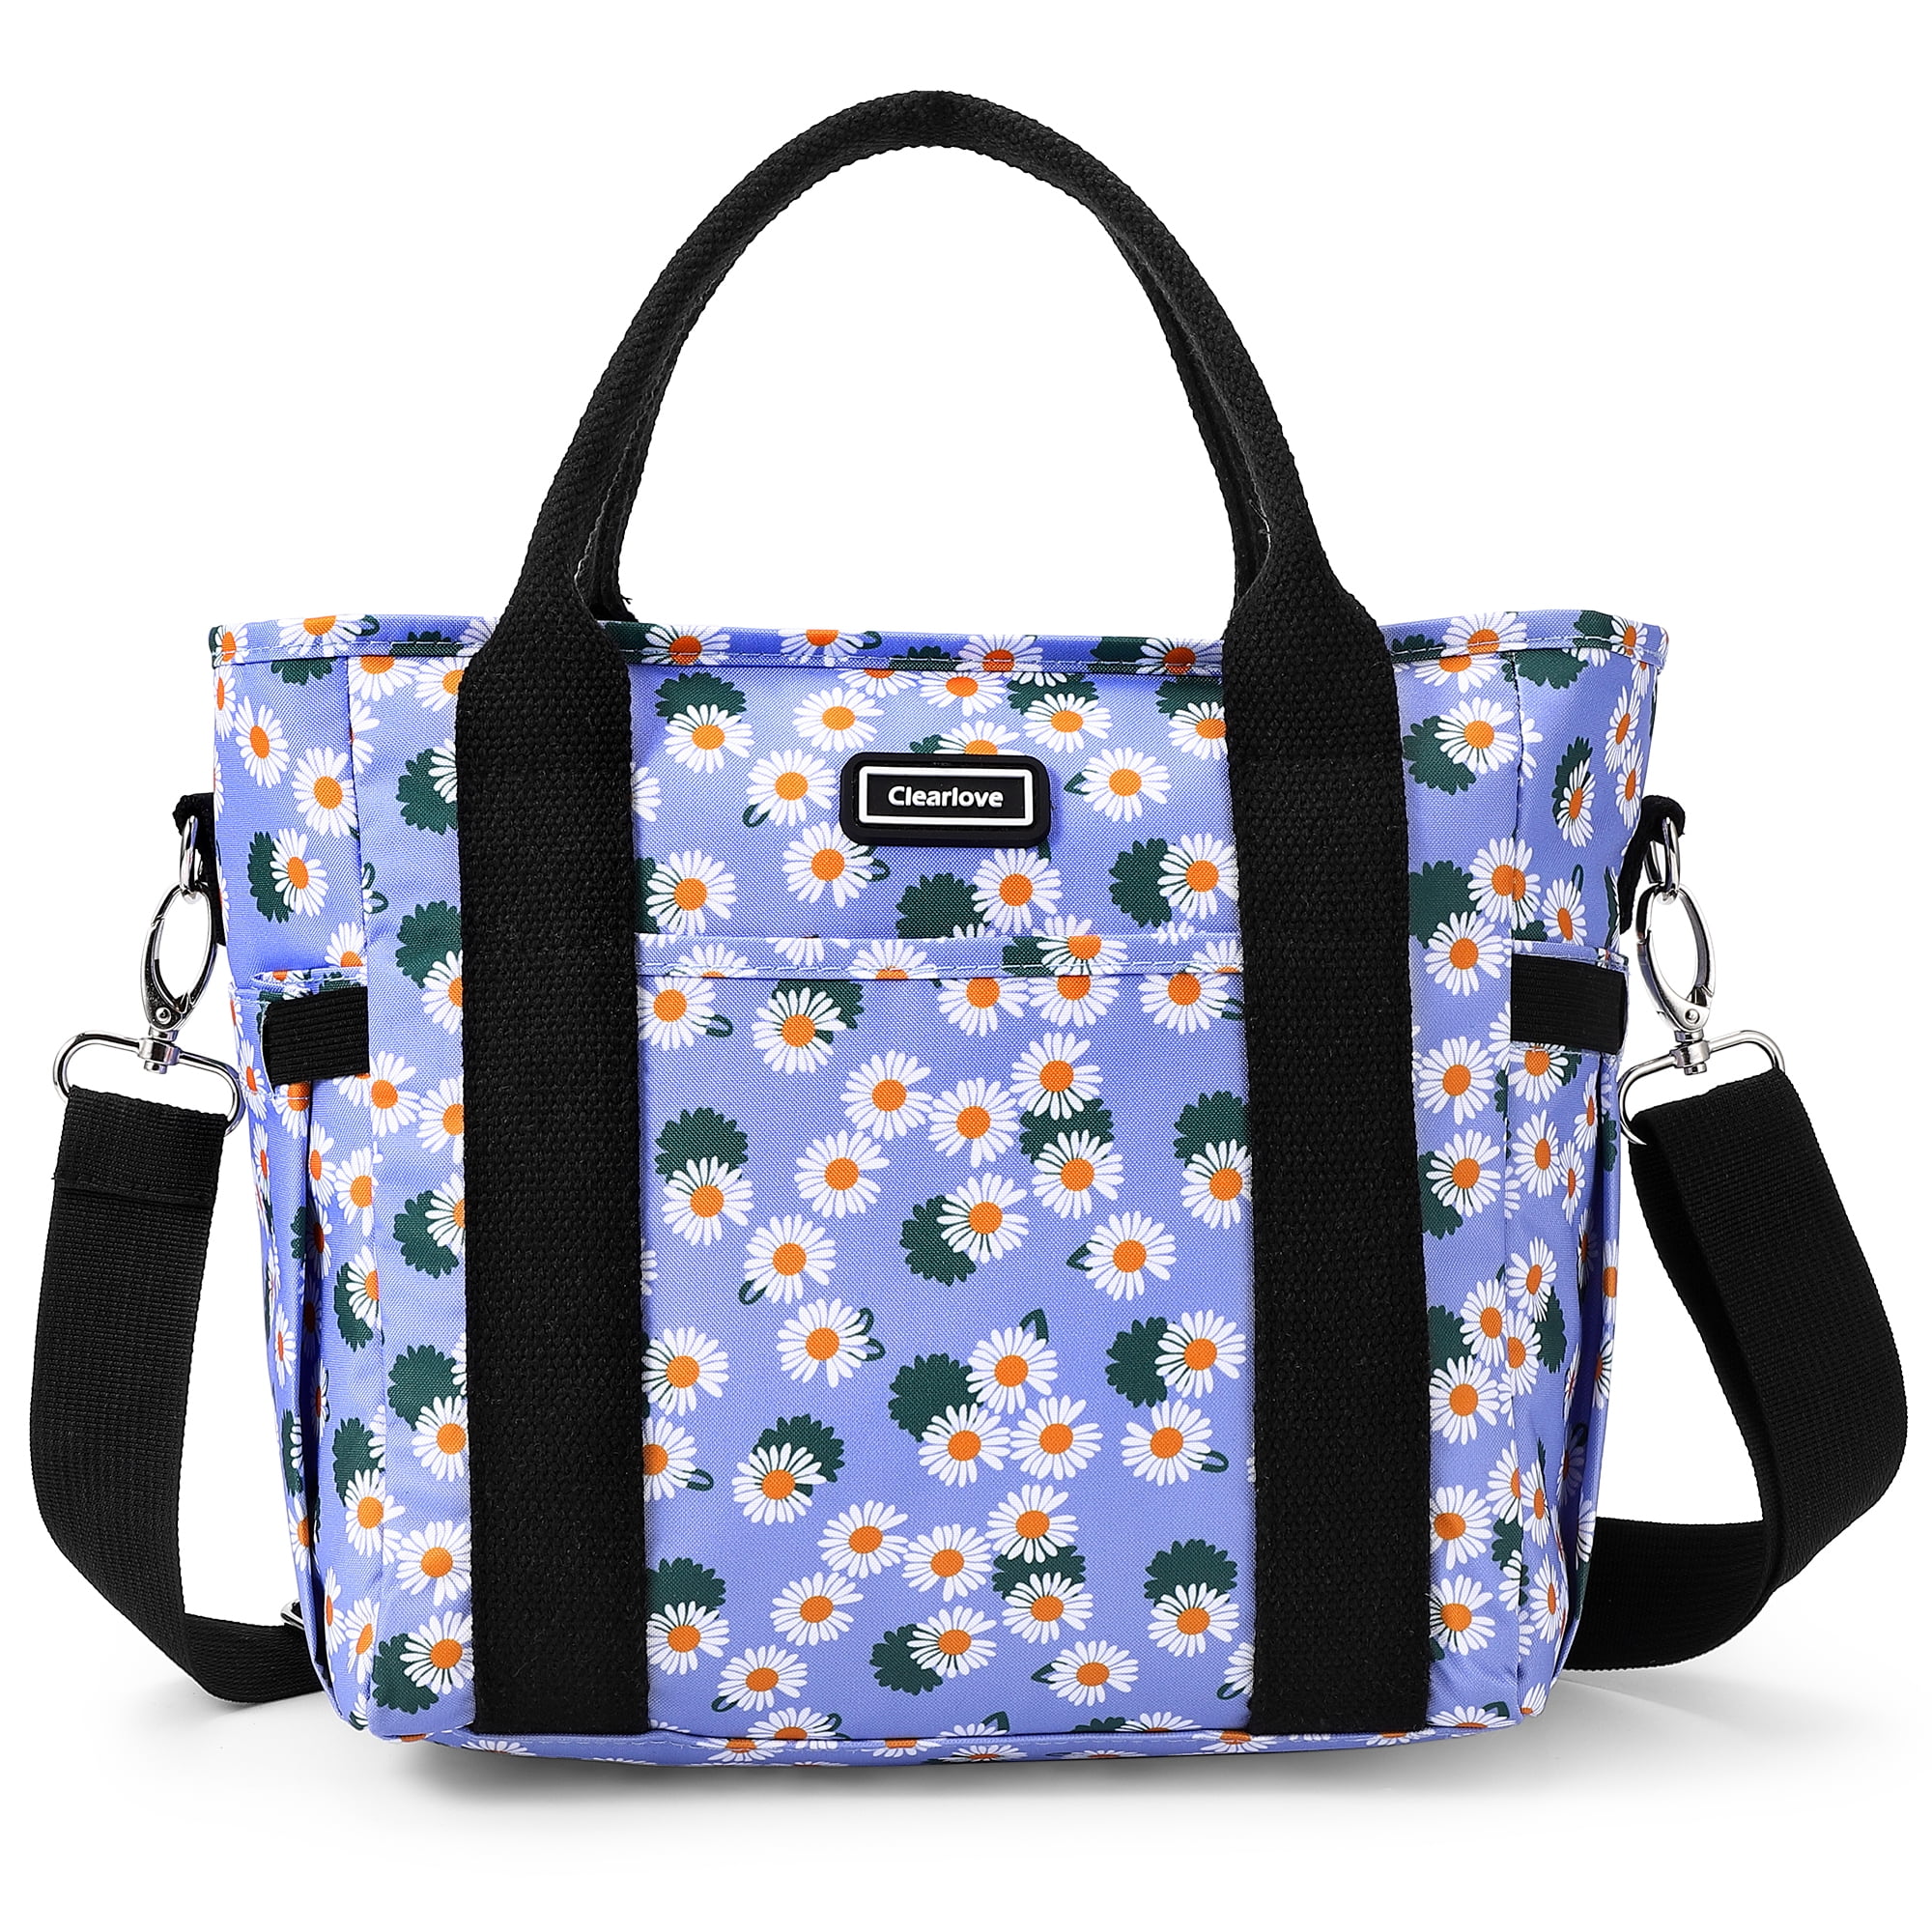 Pokemon Pikachu Insulated Lunch Bag for Women/Men Leakproof Cooler Tote Bag  Freezable Lunch Bag with Adjustable Shoulder Strap for Kids/Adult